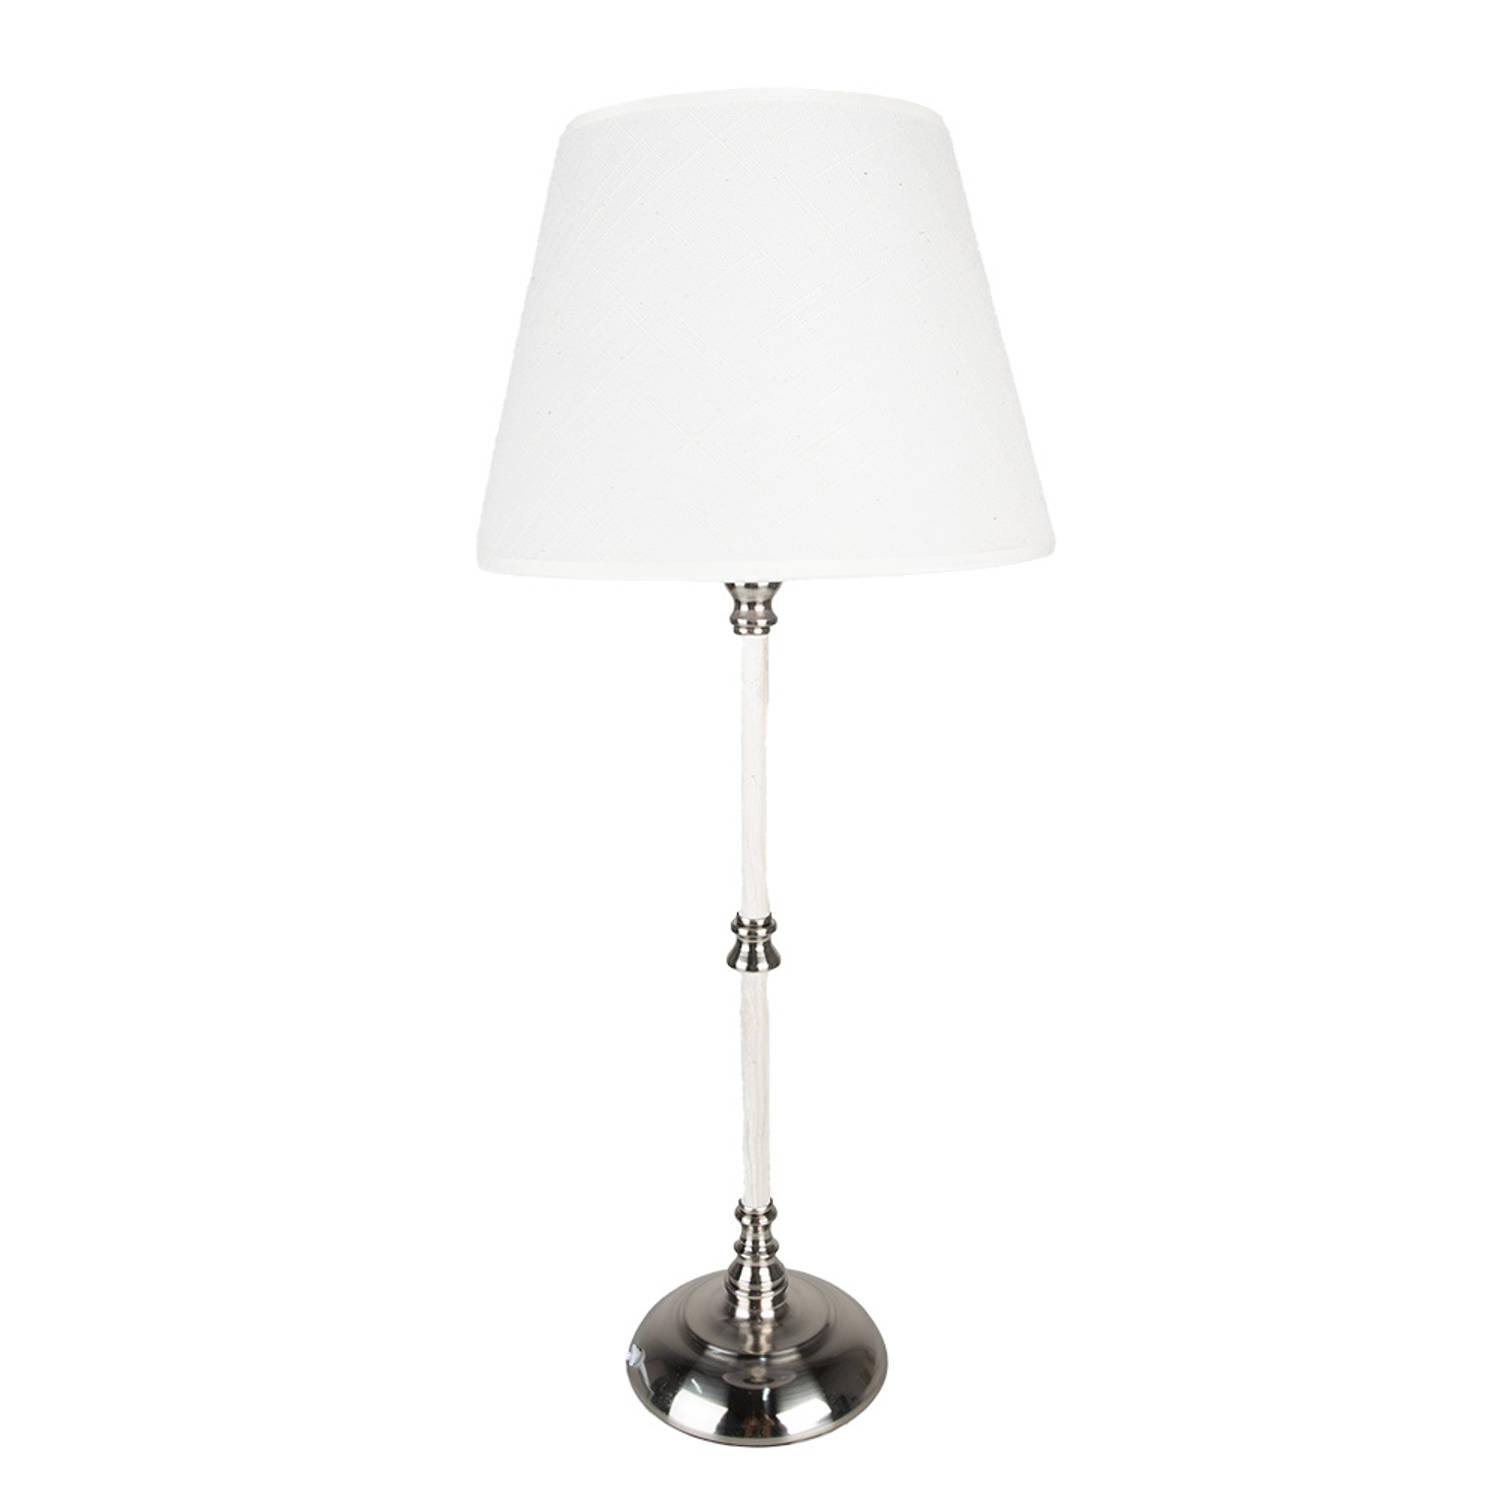 HAES DECO Tafellamp Loving Chic Zilverkleurige Vintage Lamp, Ø 18x44 cm Bureaulamp, Sfeerlamp, Nacht